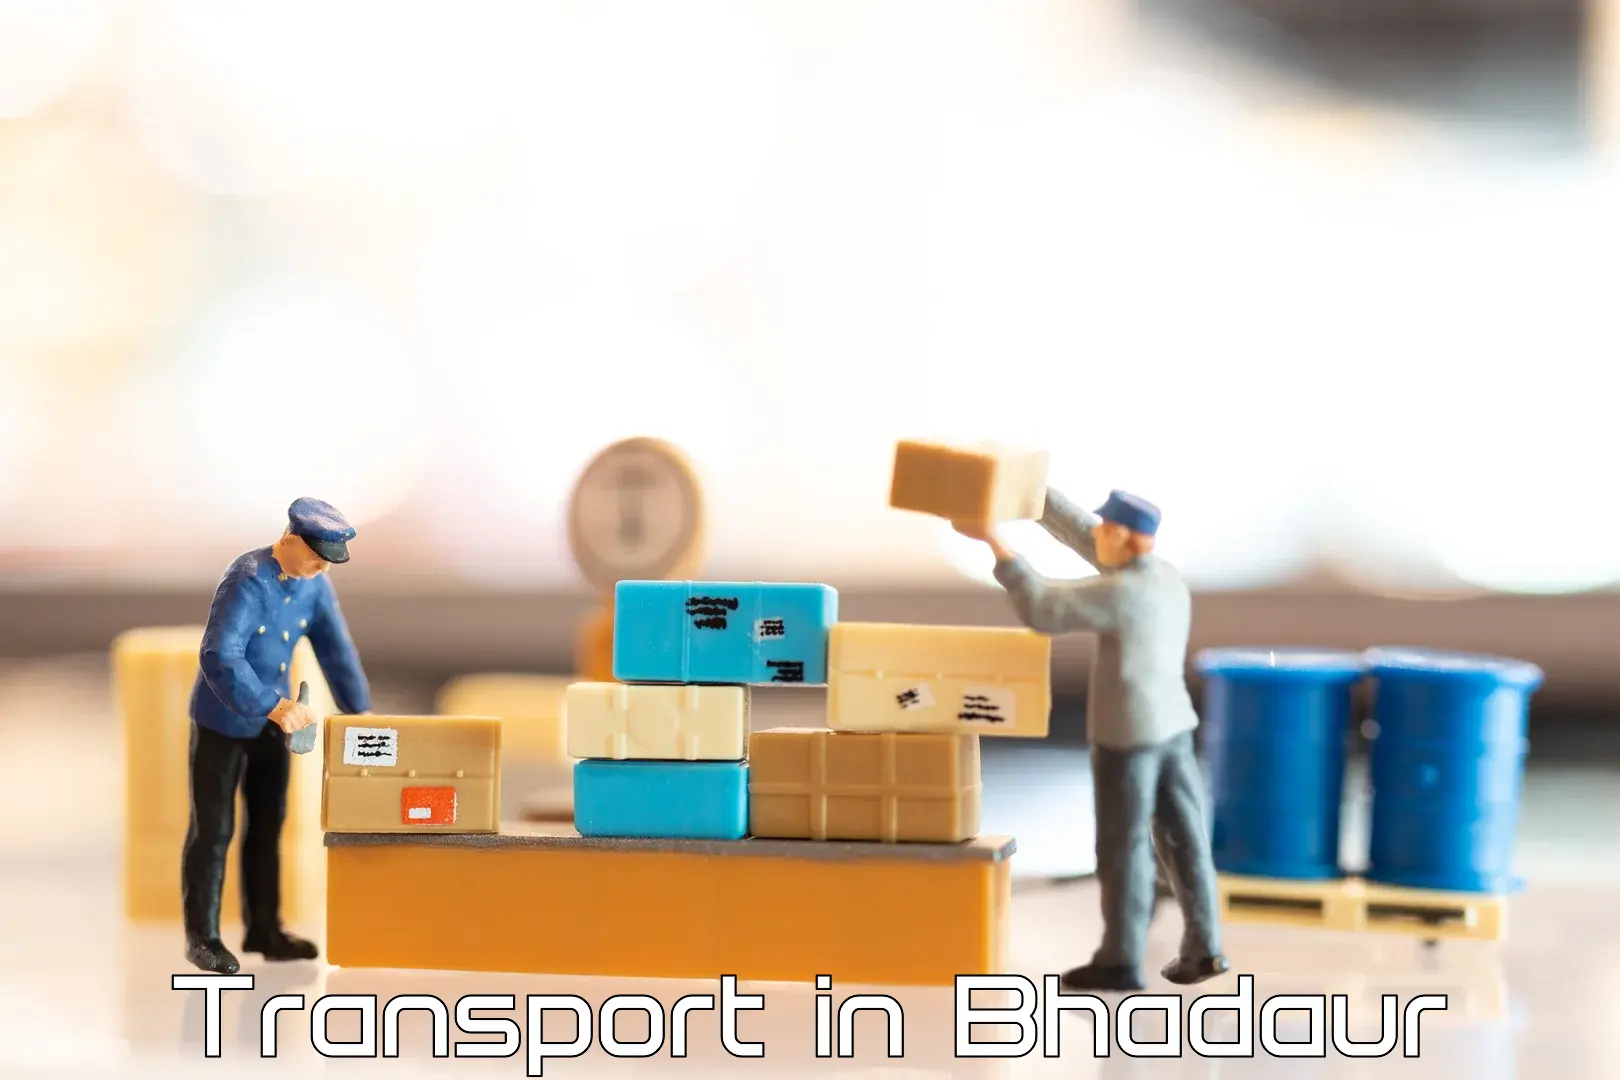 Cargo train transport services in Bhadaur